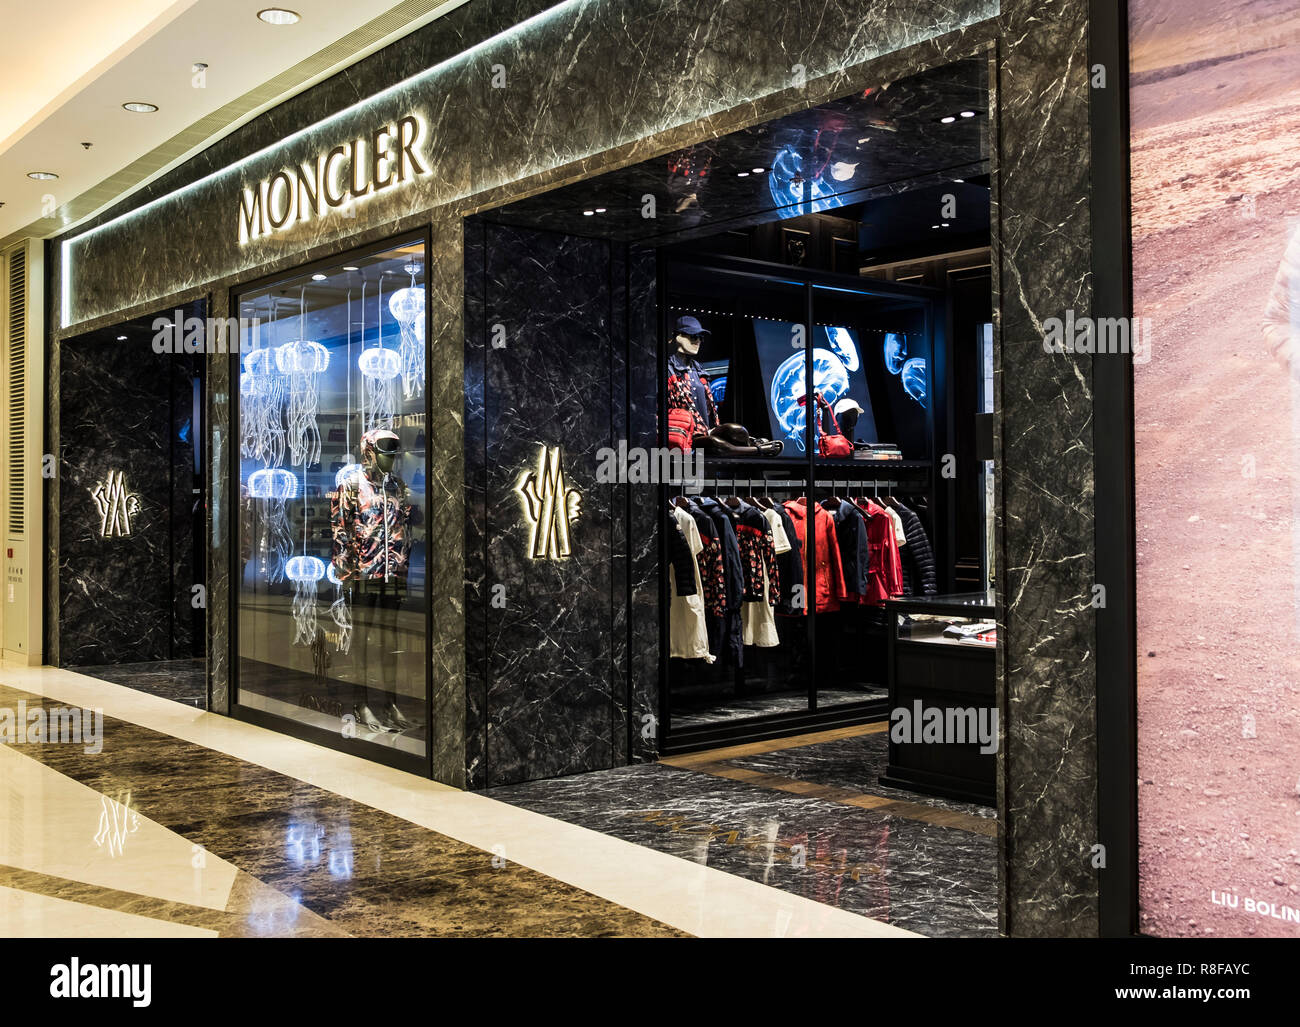 Hong Kong, April 7, 2019: Moncler store in Hong Kong Stock Photo - Alamy